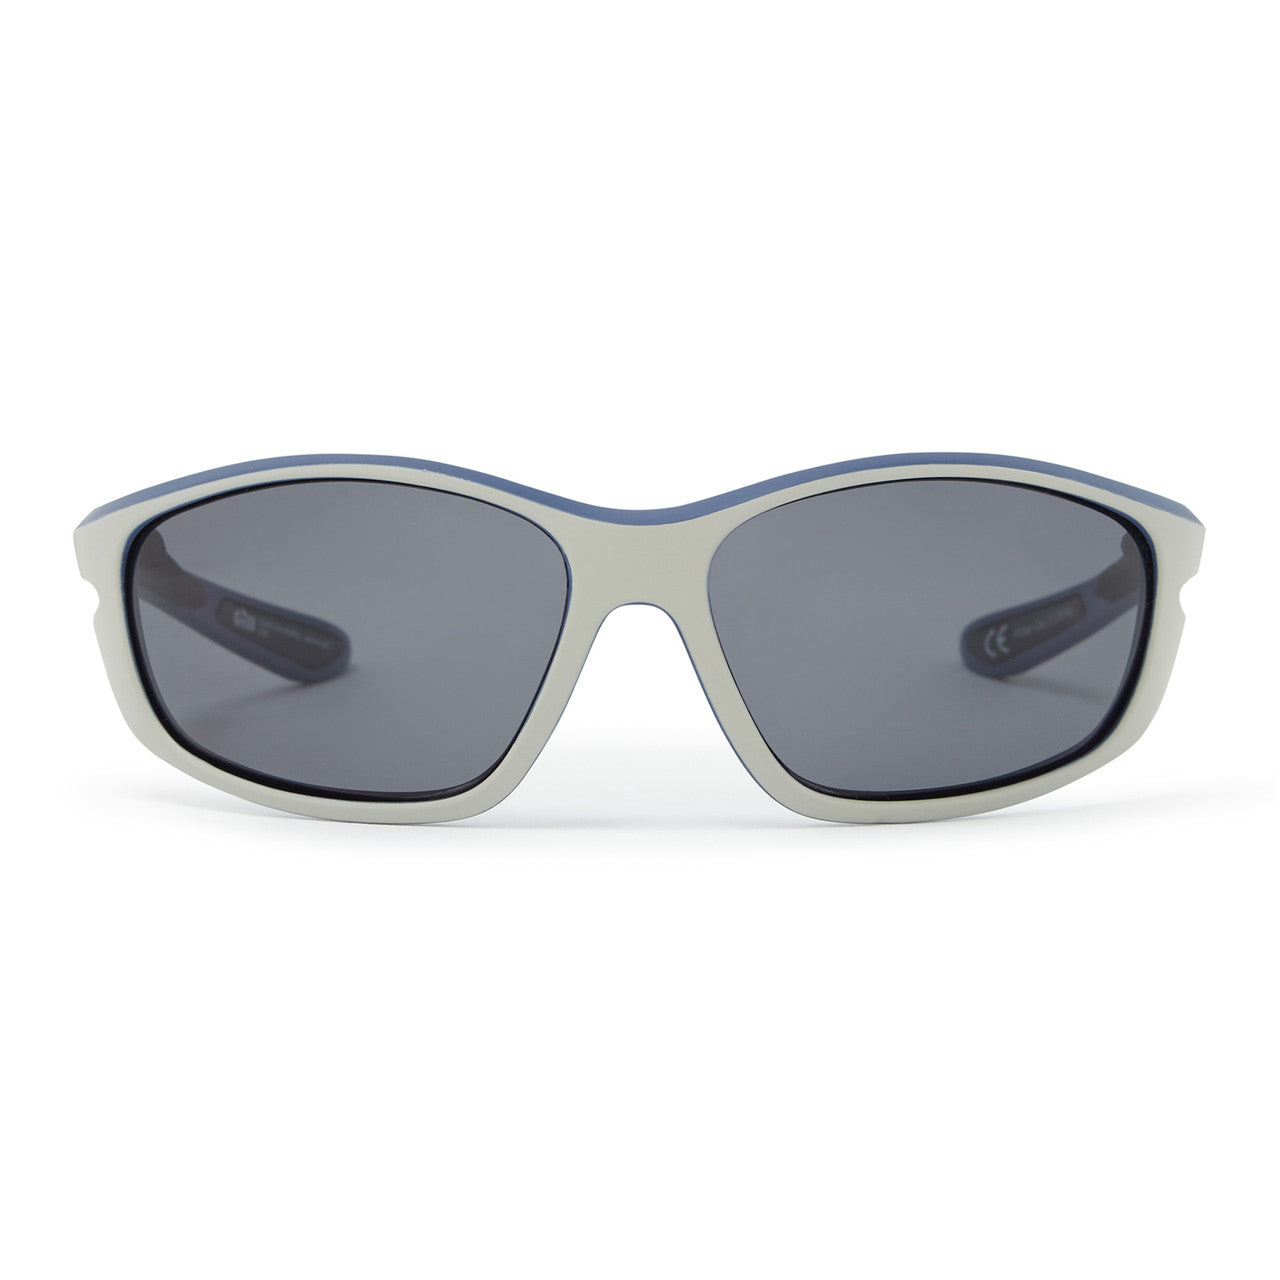 GILL Corona Sunglasses Silver/Smoke - One Size